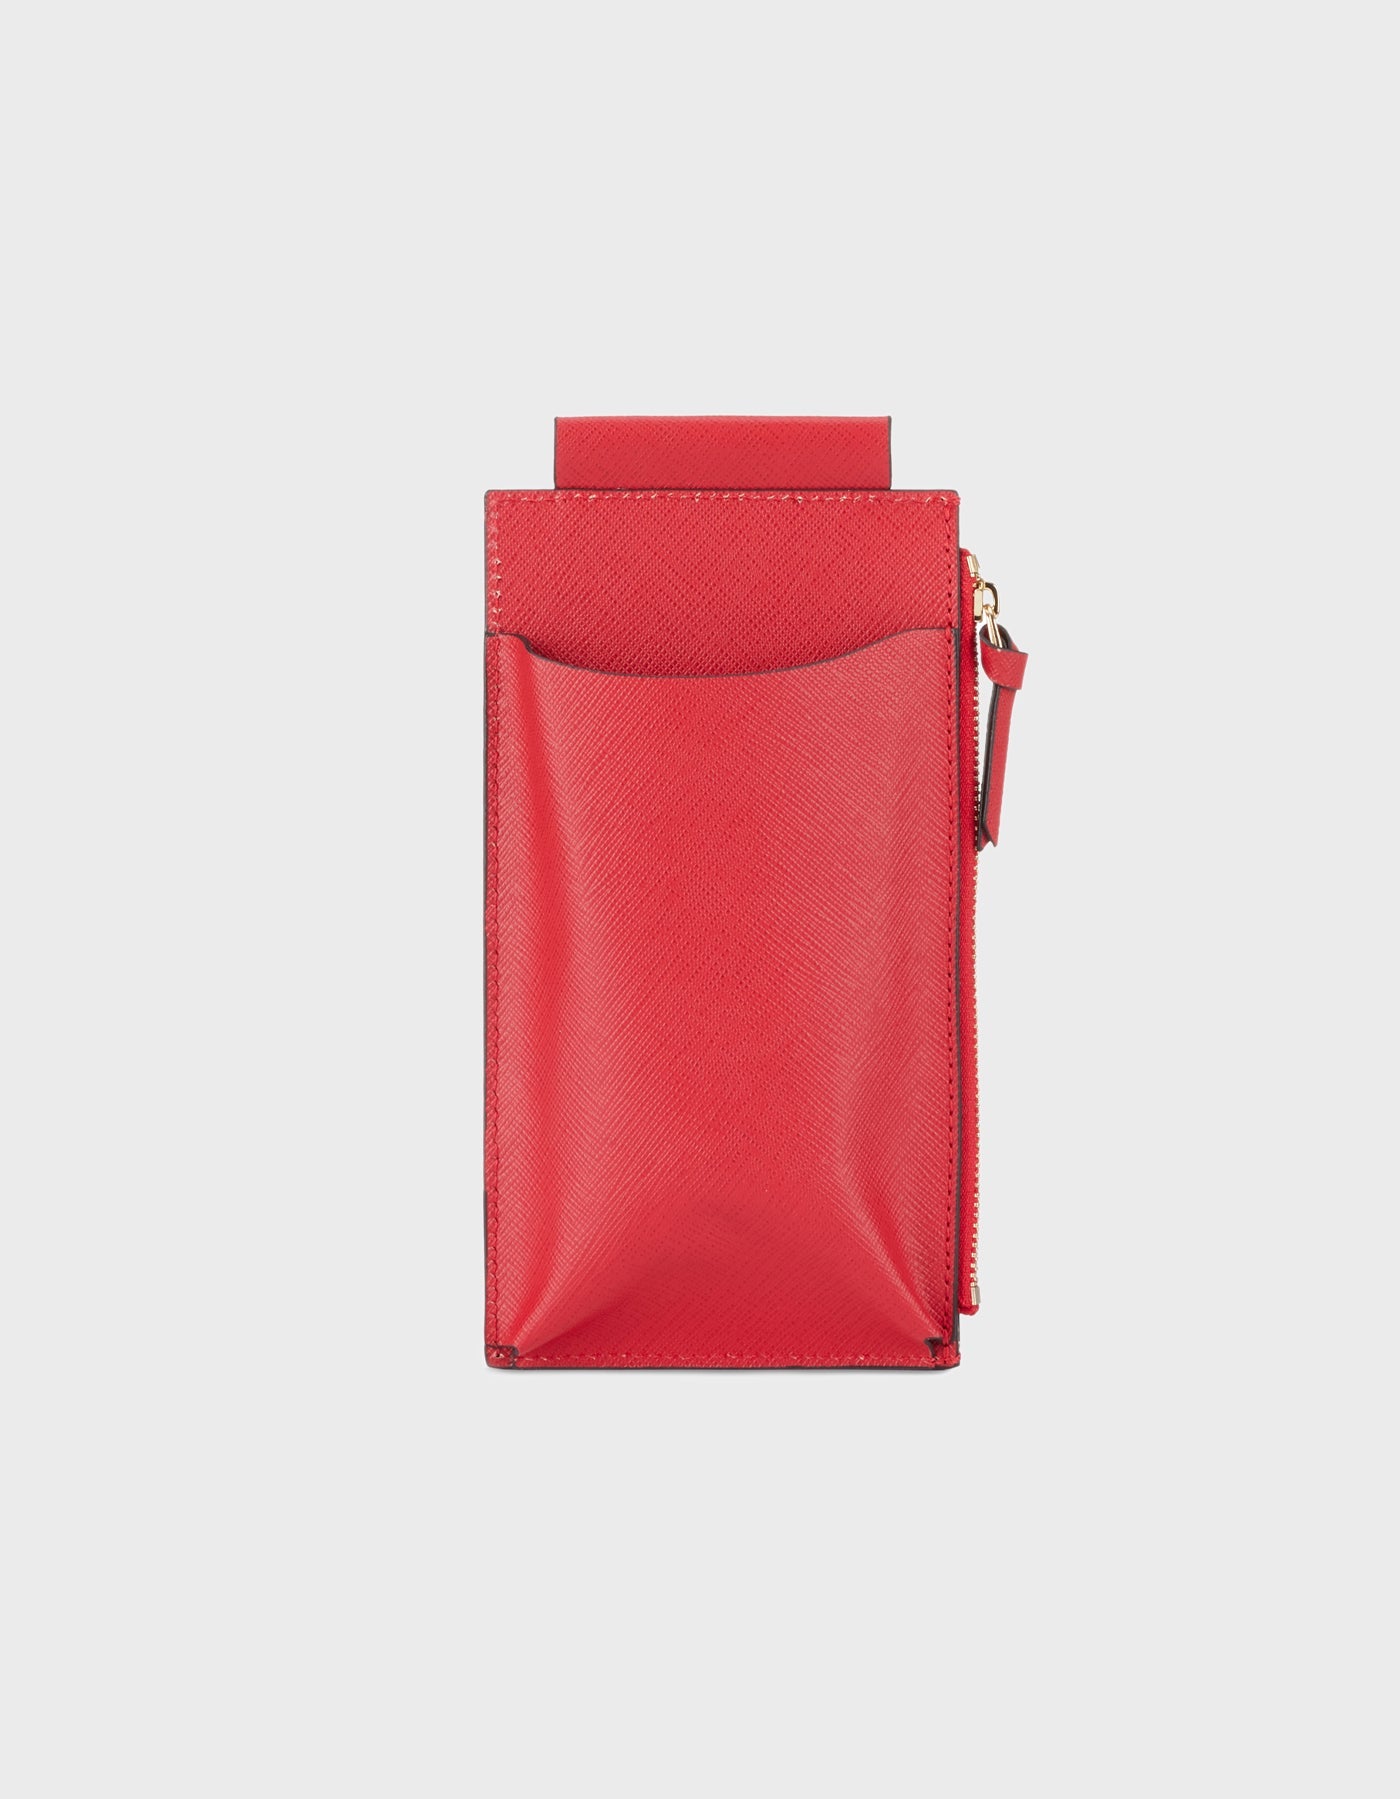 HiVa Atelier | Crossbody Phone Bag Red | Beautiful and Versatile